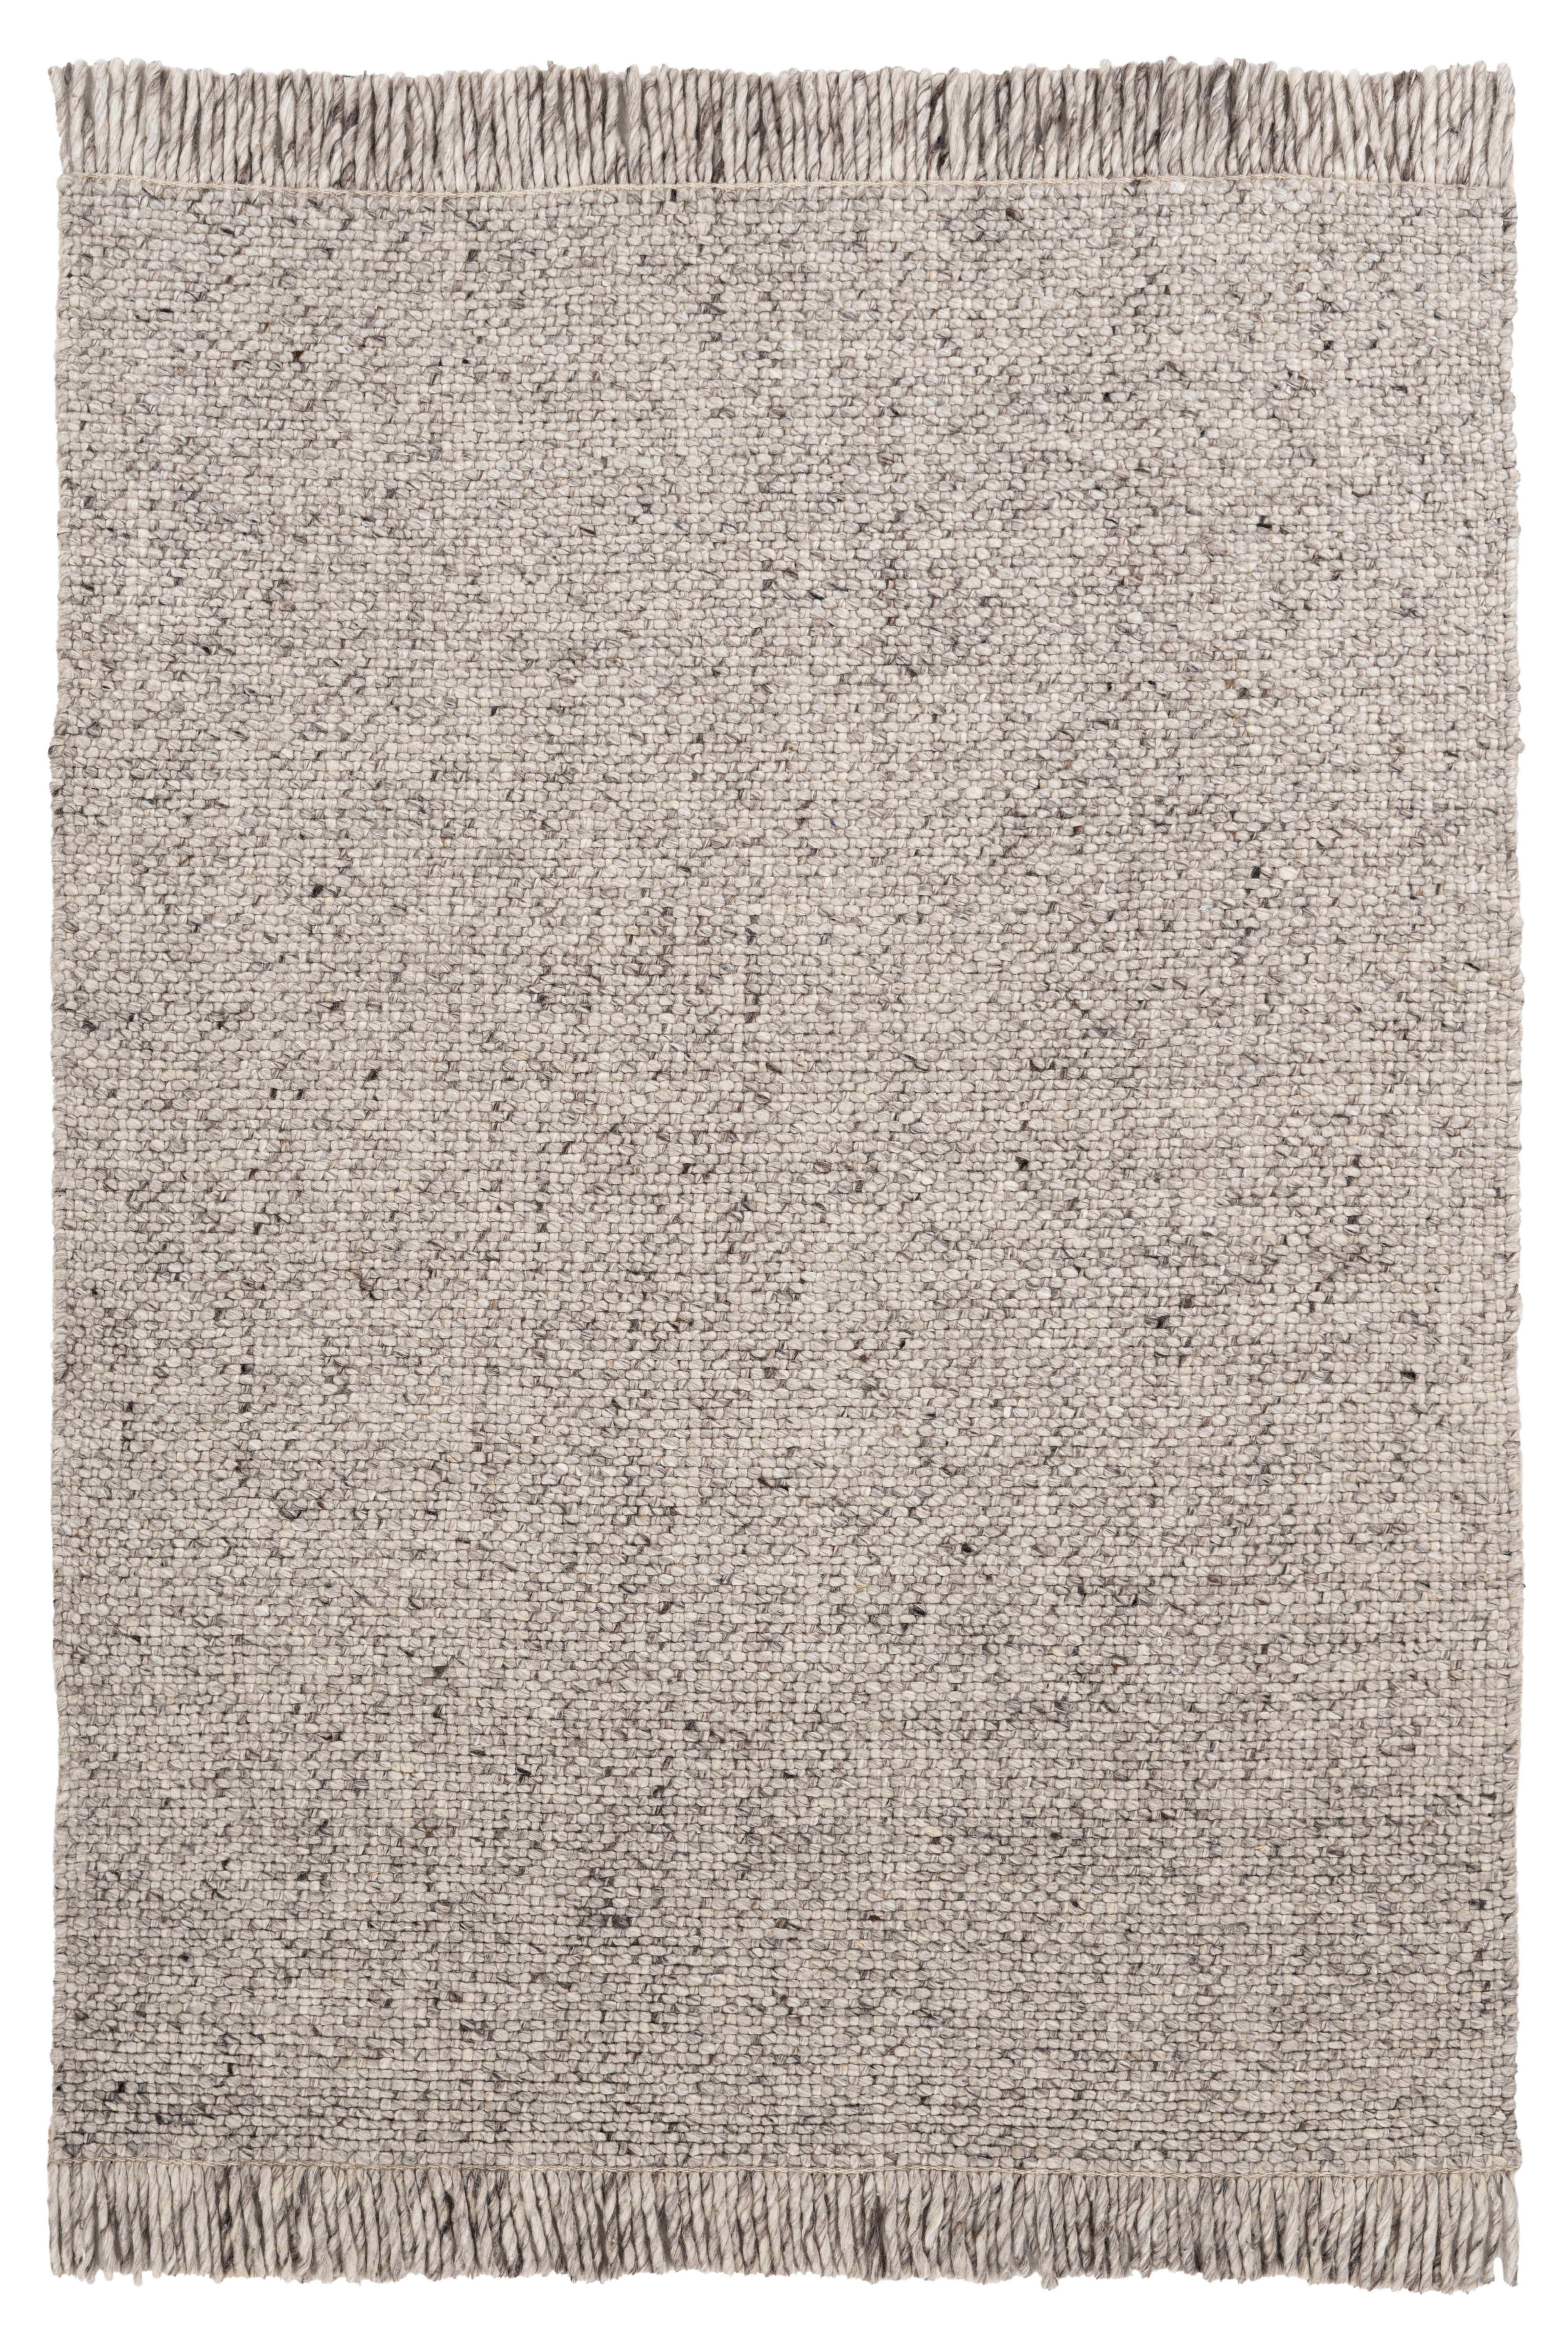 WEBTEPPICH  80/150 cm  Grau   - Grau, Design, Naturmaterialien/Textil (80/150cm) - Linea Natura